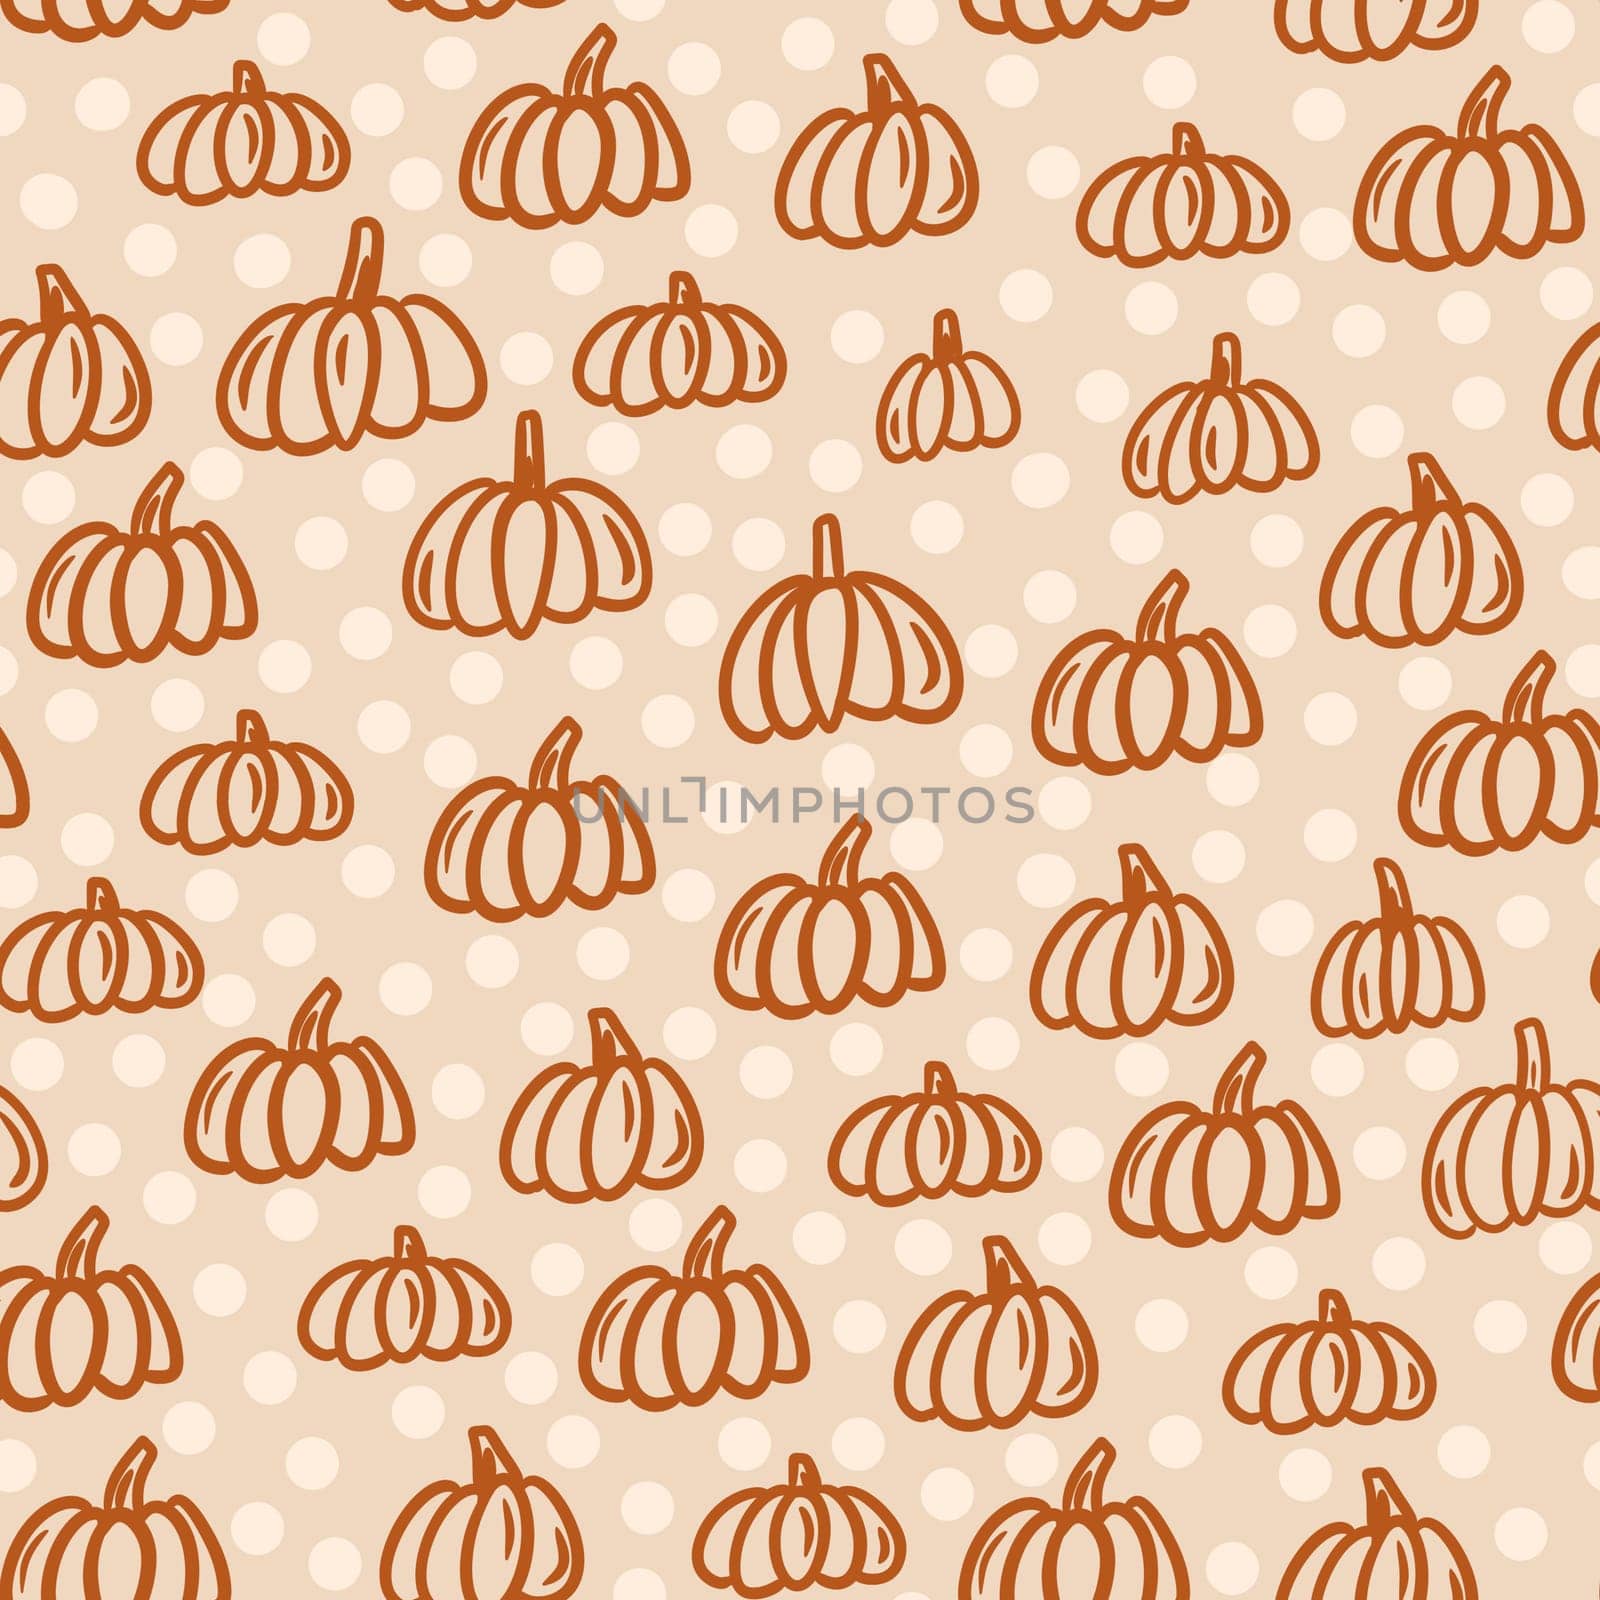 seamless hand drawn pattern beige brown polka dot background ripe organic pumpkin squashes. For halloween thanksgiving design paper textile harvest celebration fall autumn season cute nursery